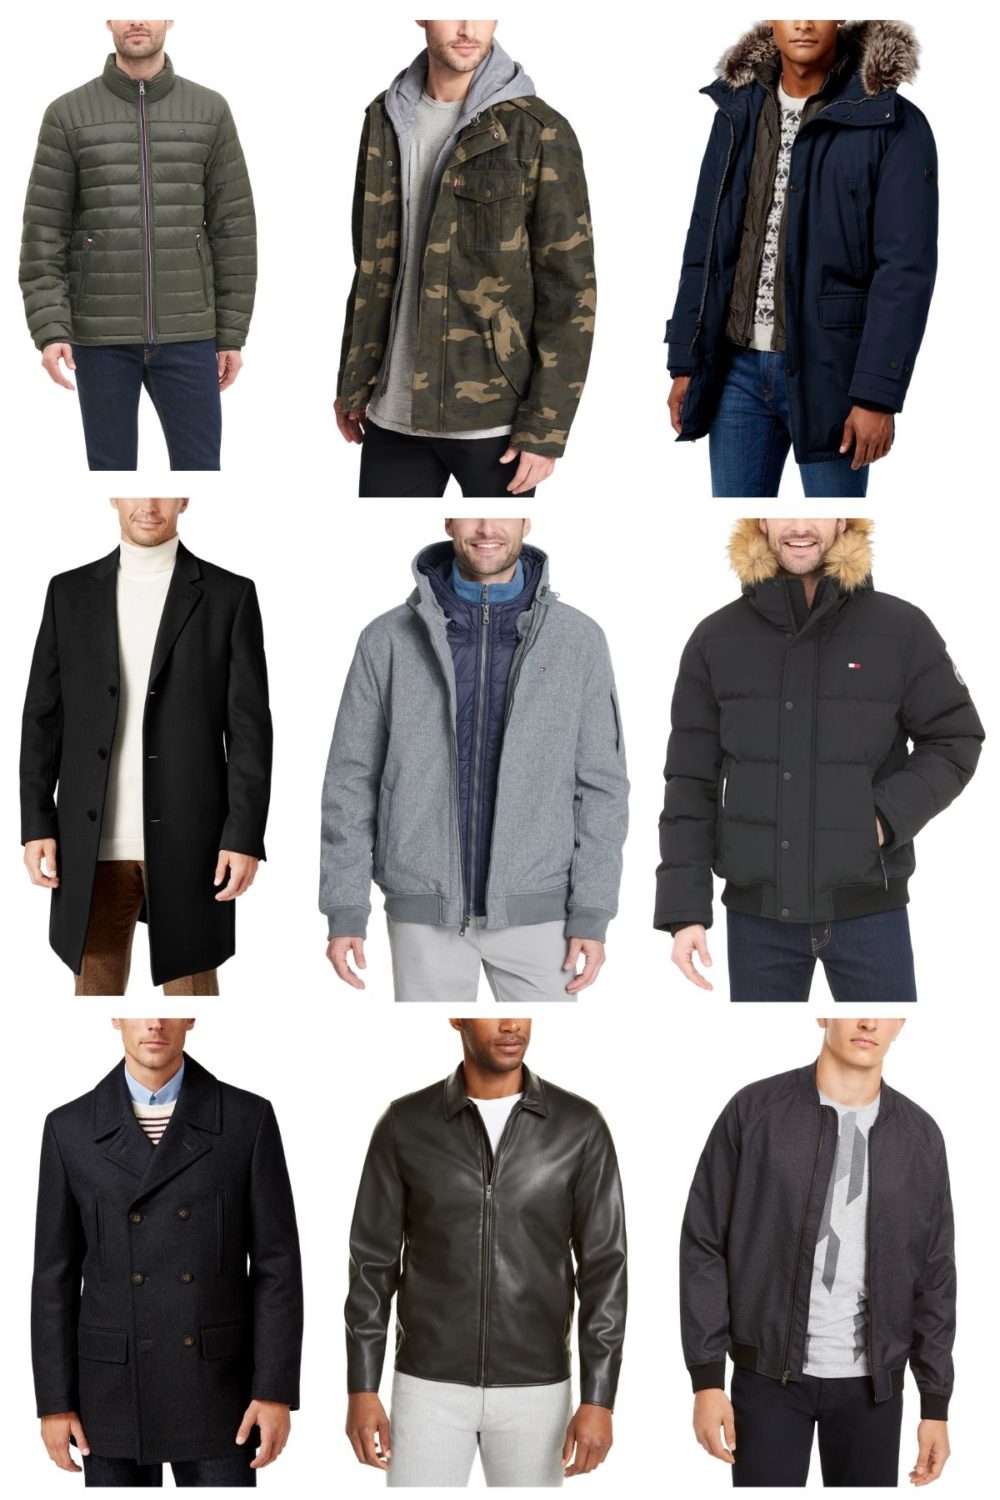 Men's Coats & Jackets on sale at Macy's! | Skye McLain